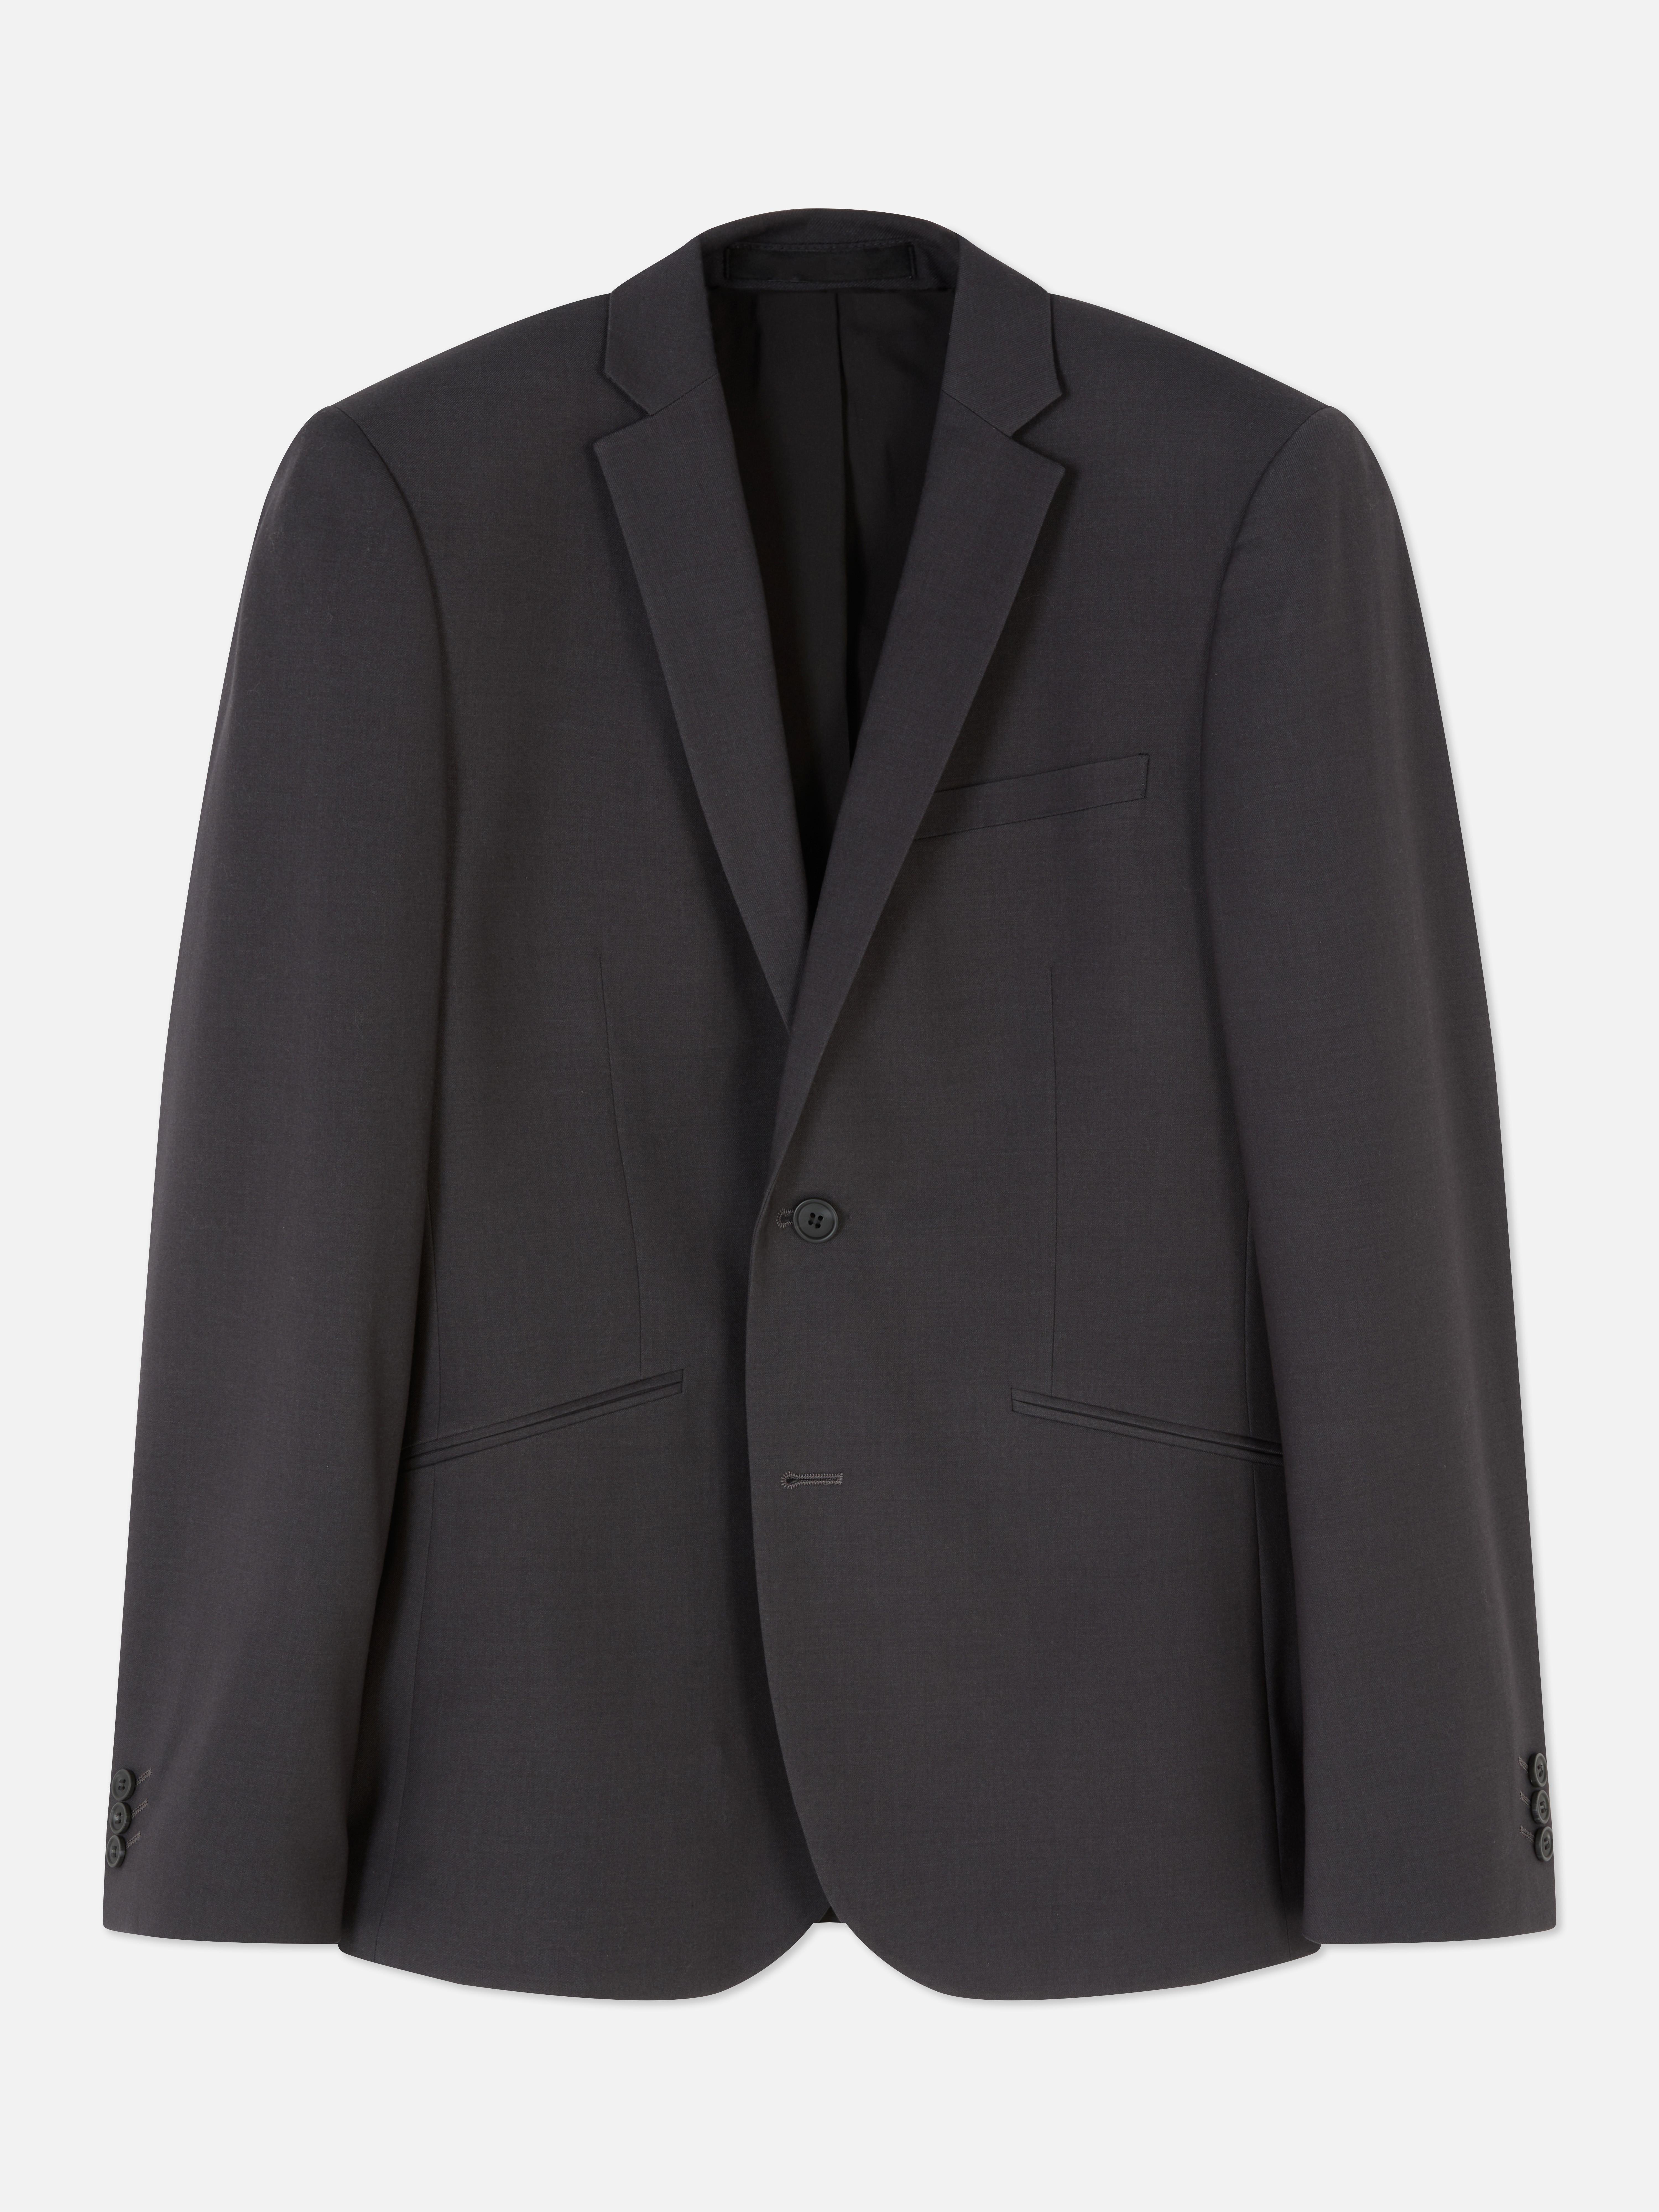 Essential Suit Jacket